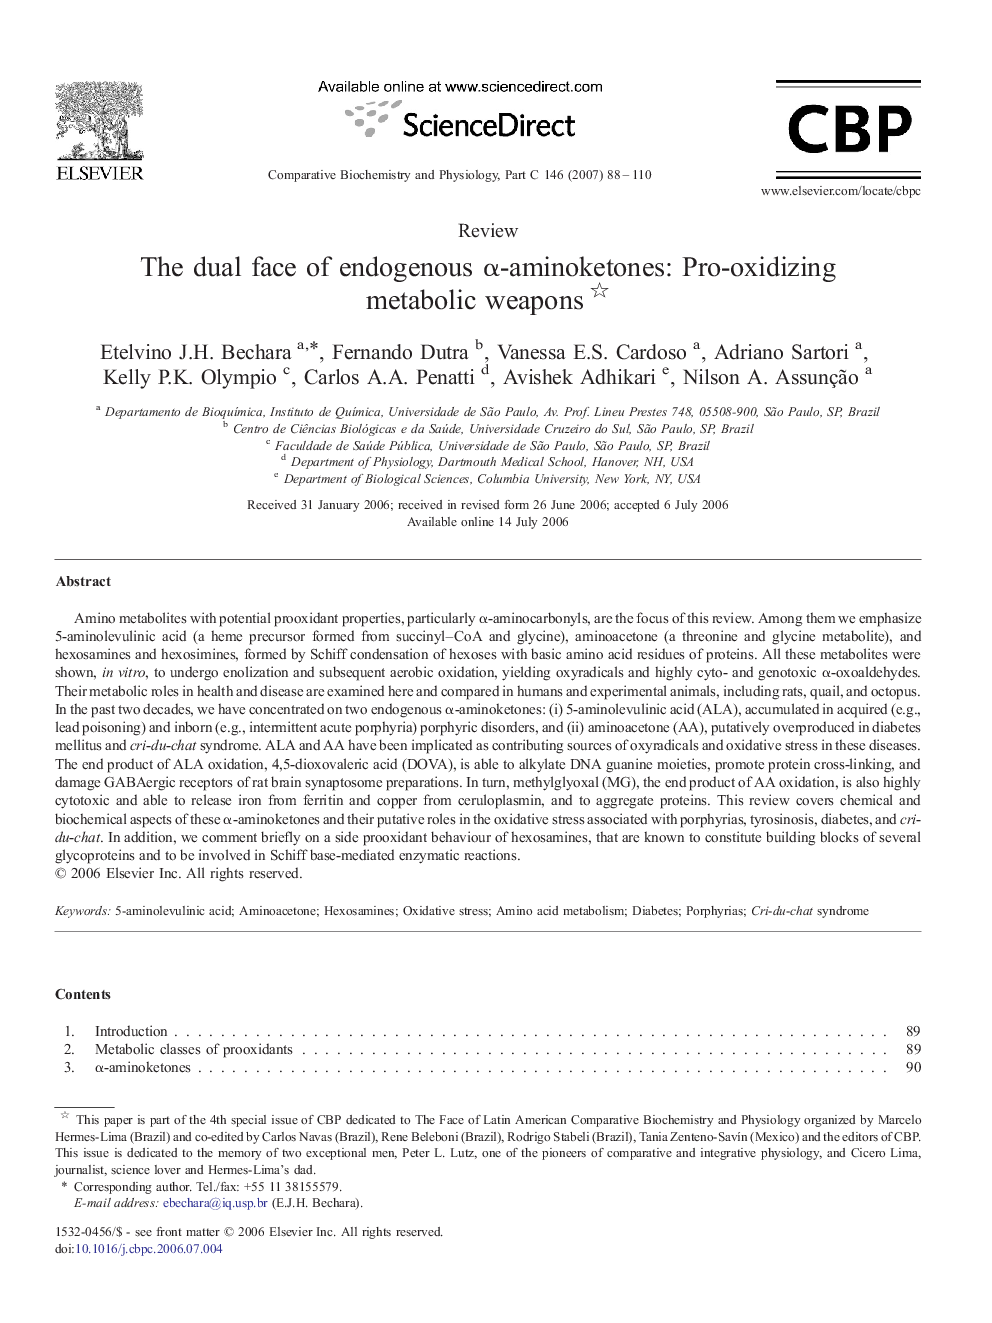 The dual face of endogenous α-aminoketones: Pro-oxidizing metabolic weapons 